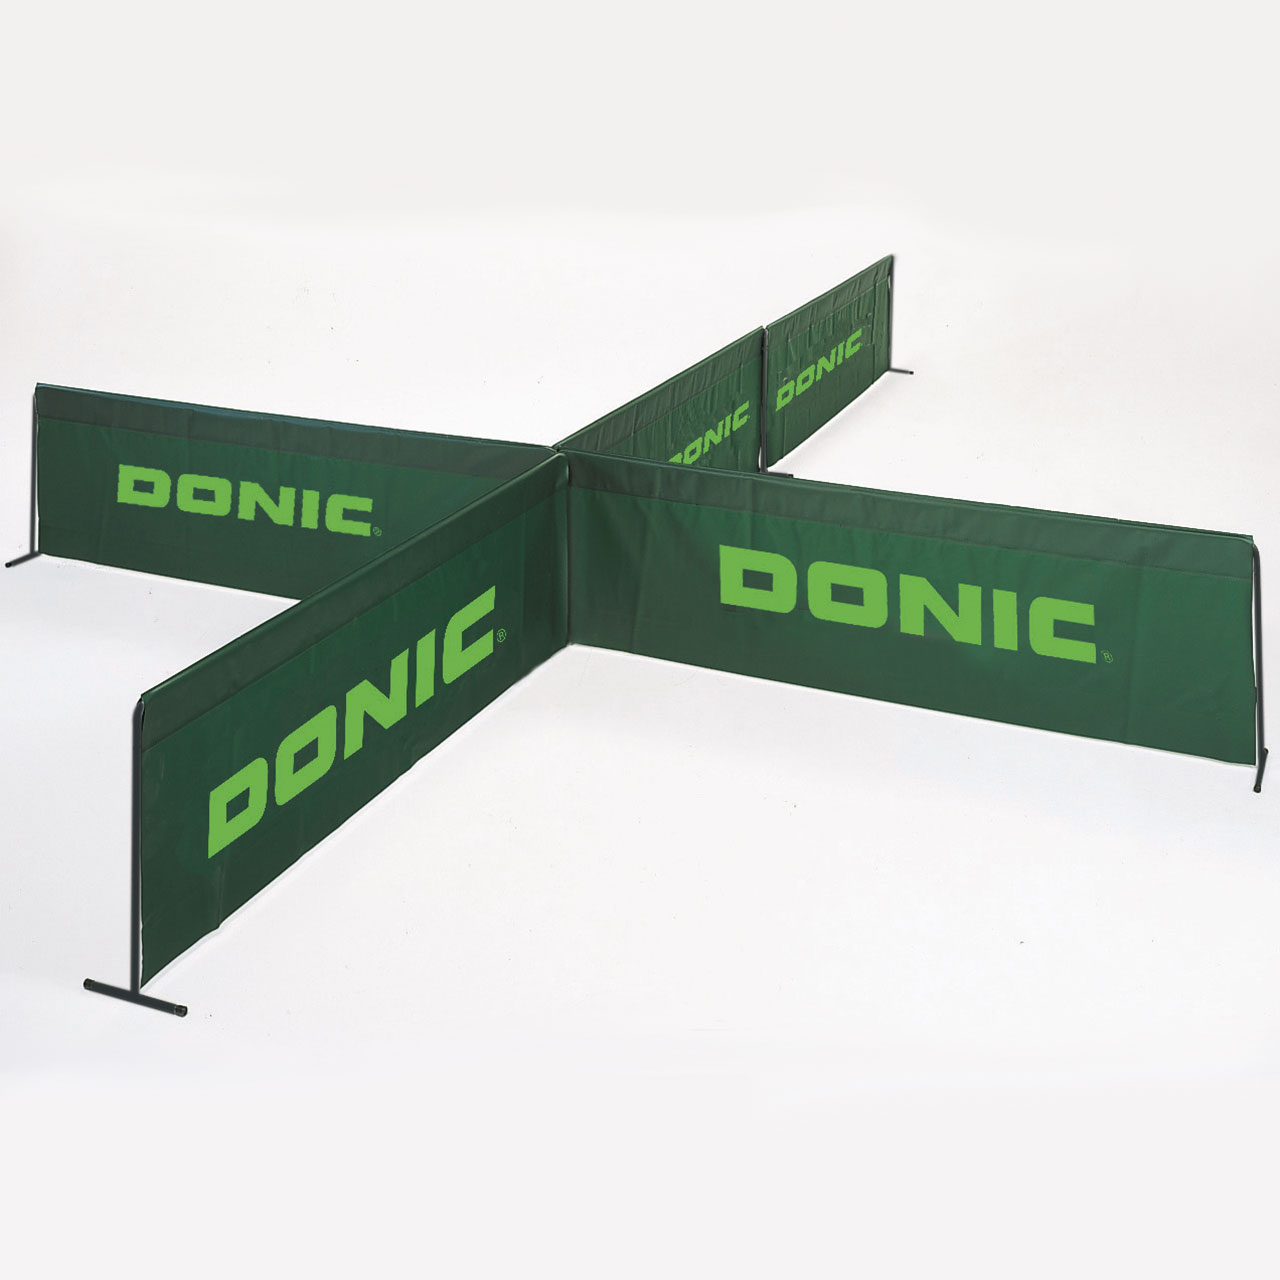 Tischtennis-Umrandung DONIC, Farbe grün, Größe 2,33x0,73m, 10er Set